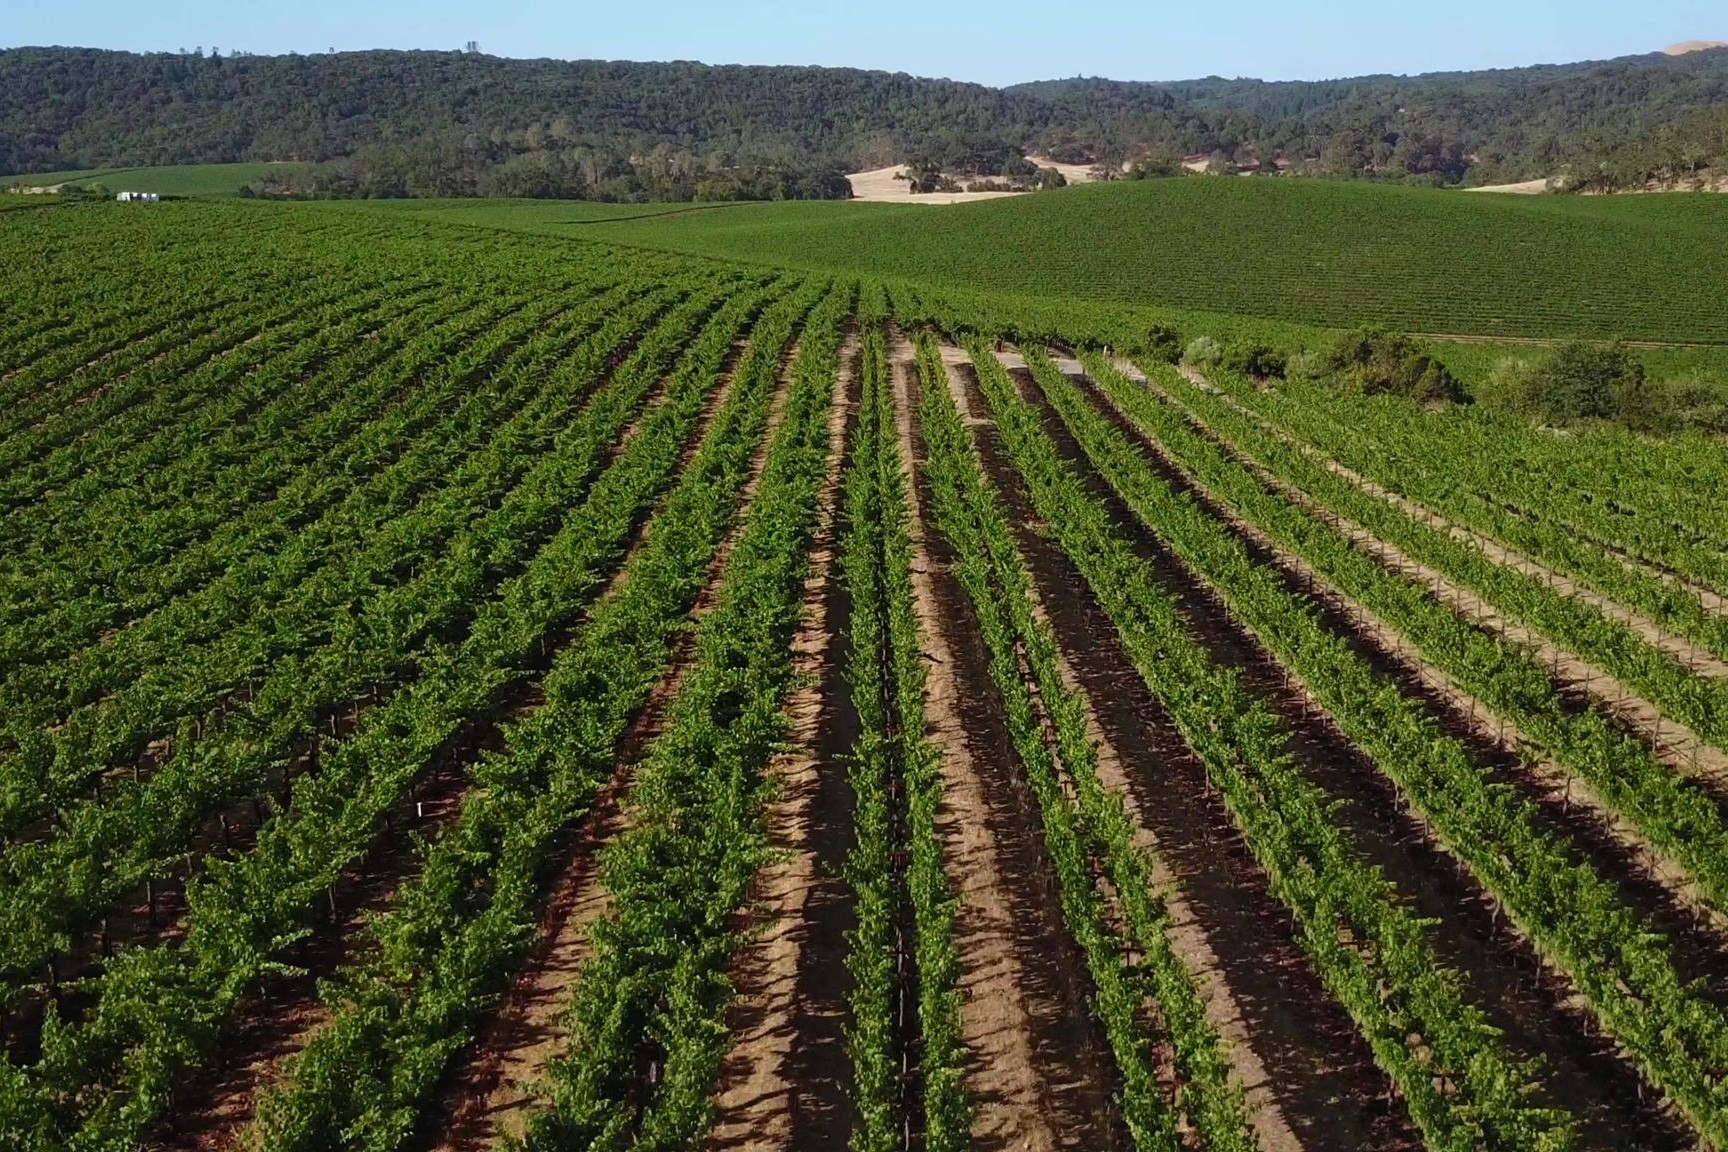 Green vineyards in Cloverdale, CA